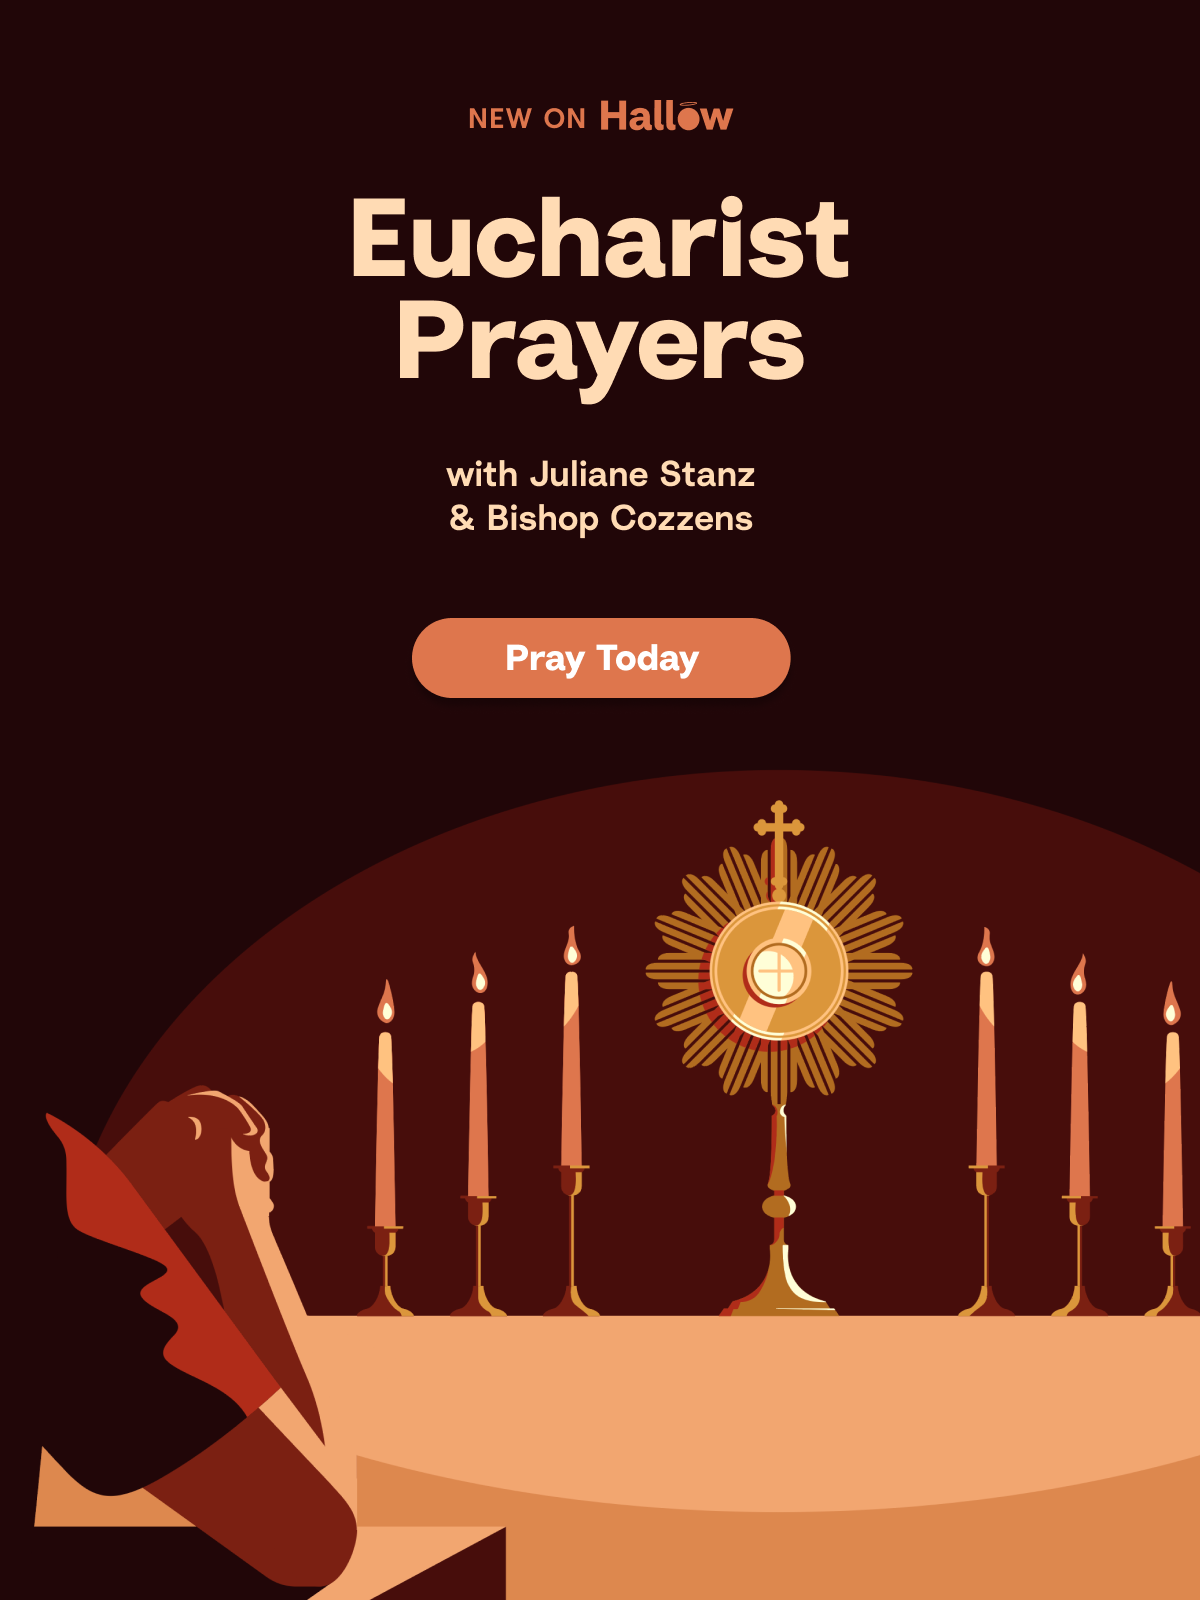 Pray with new Eurcharist Prayers on Hallow, #1 Catholic App.